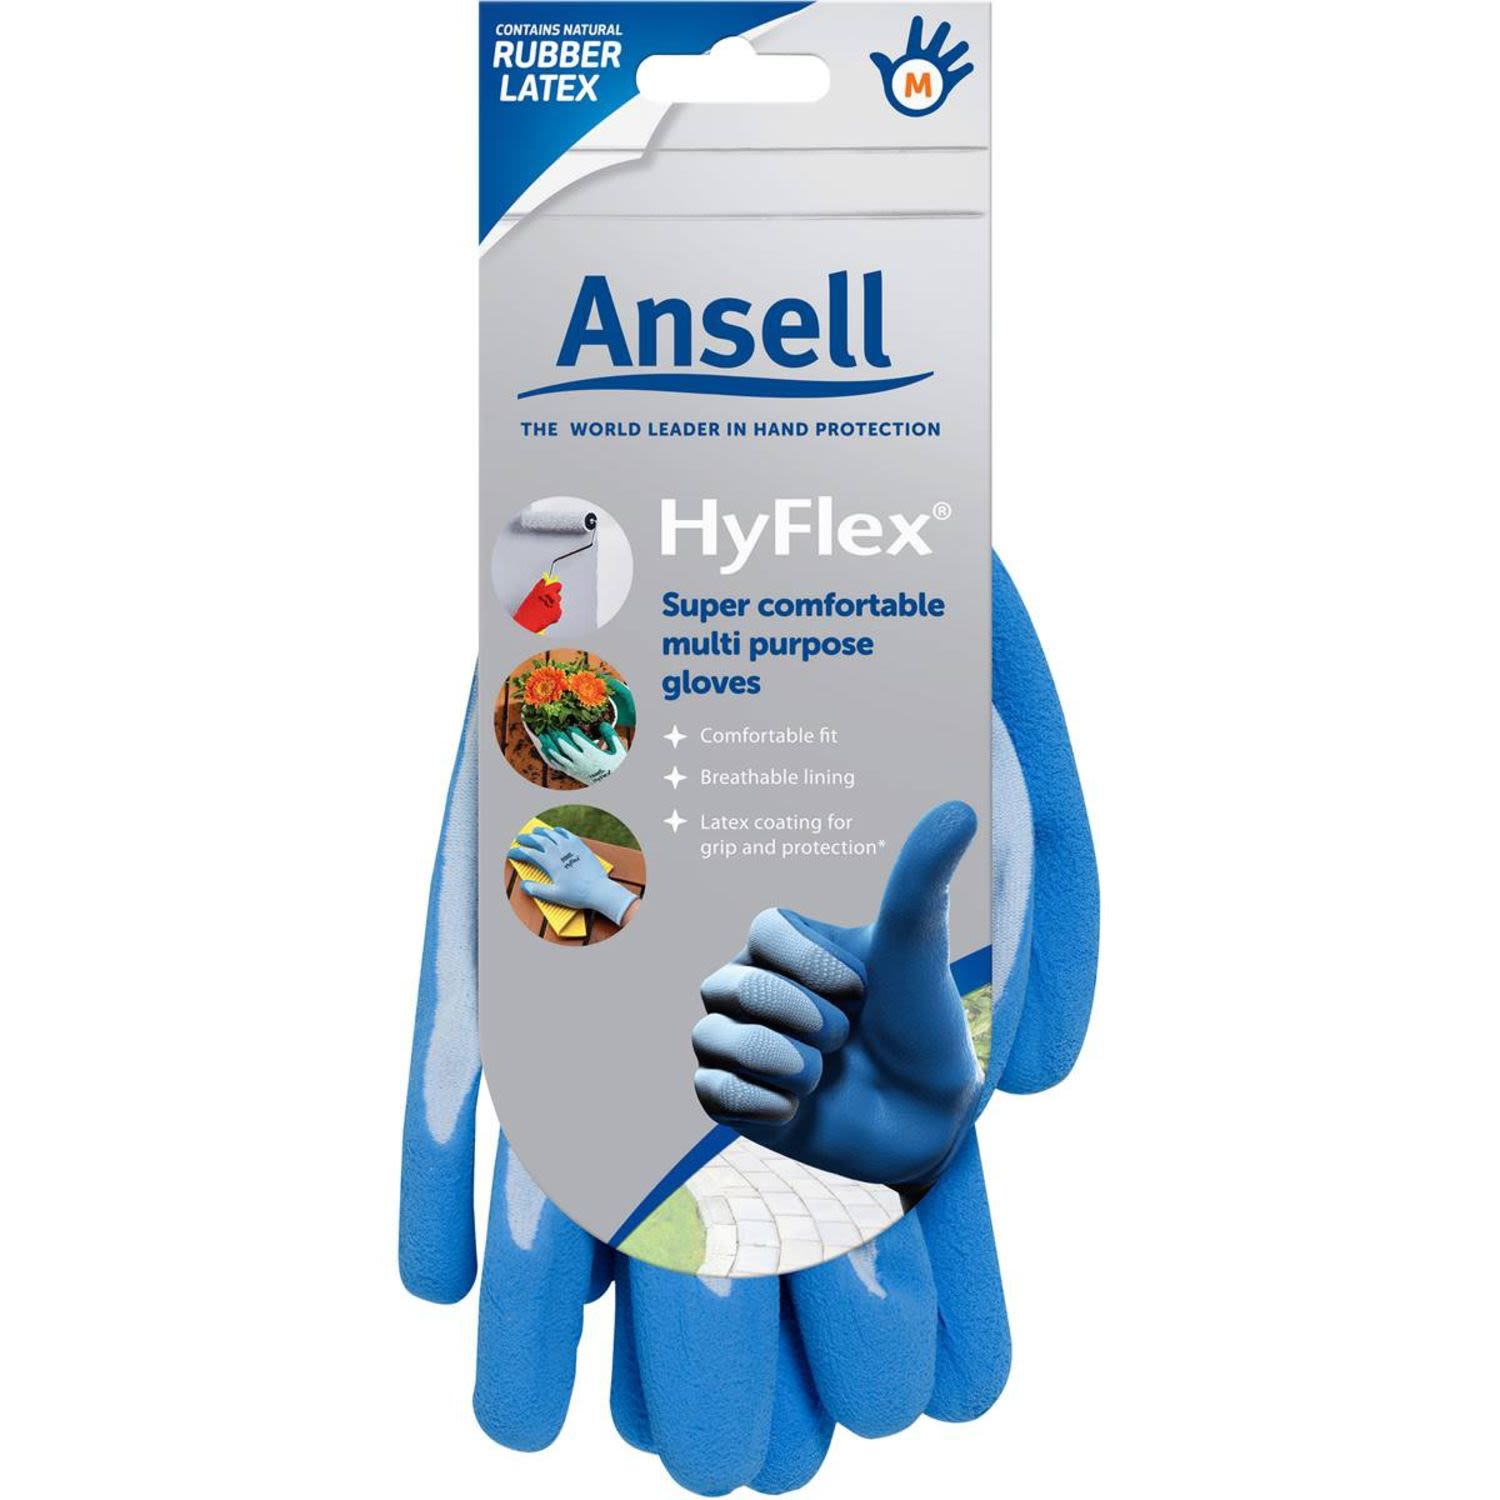 Ansell Glove Hyflex Medium, 1 Each